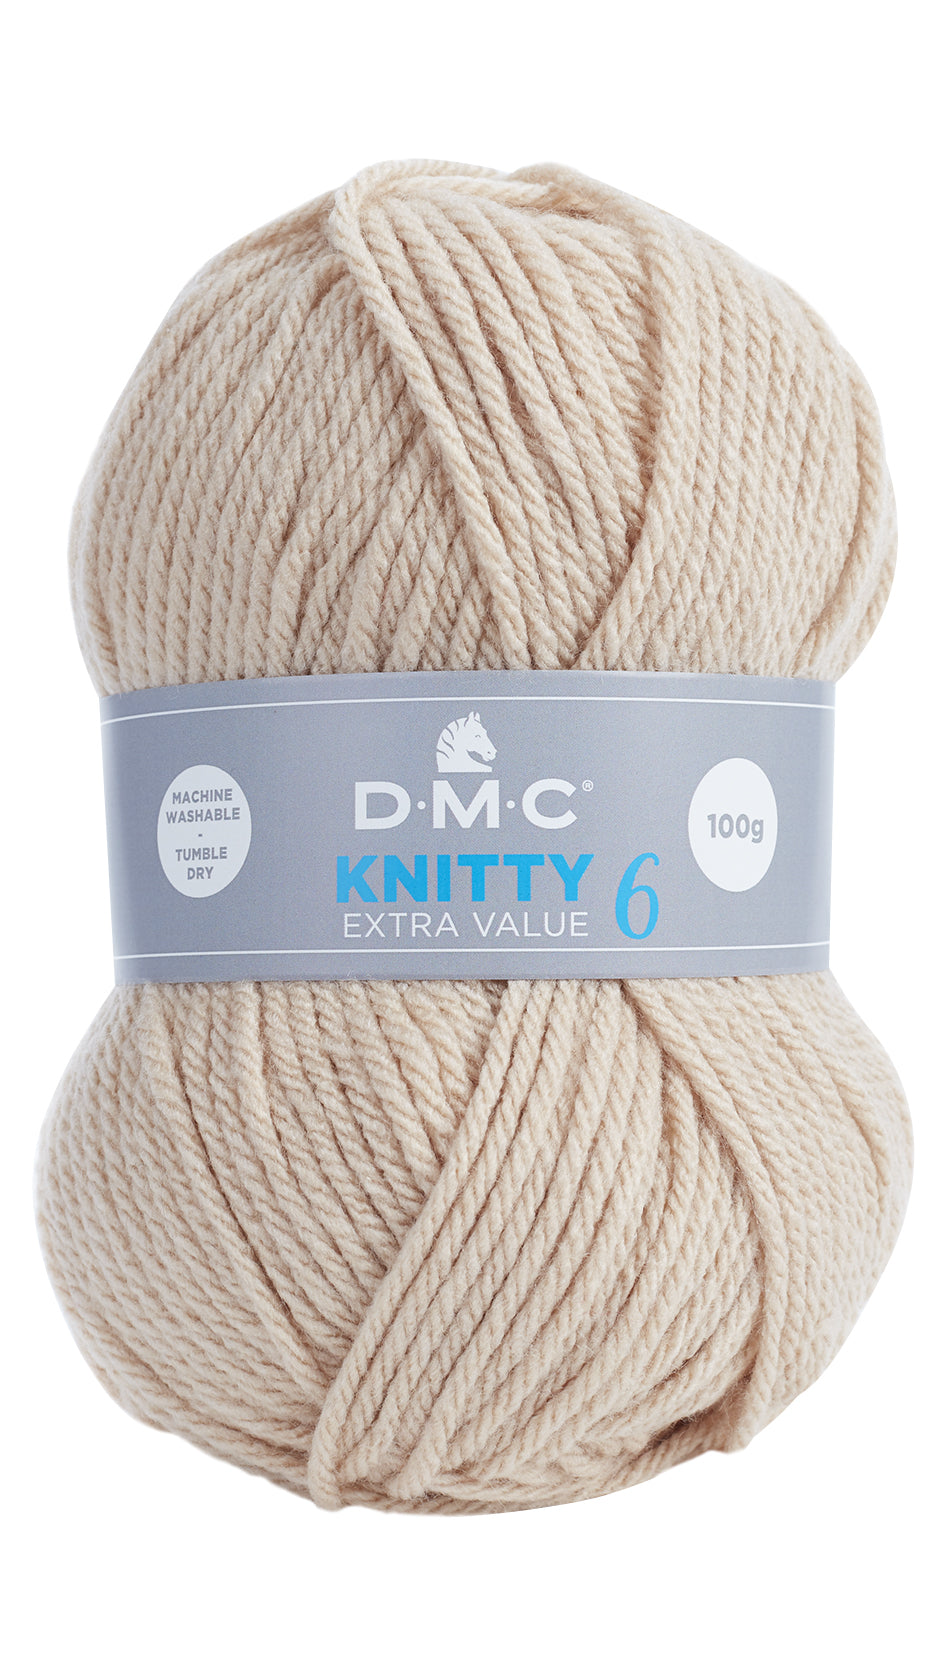 Lana Dmc Knitty 6 Colore 936